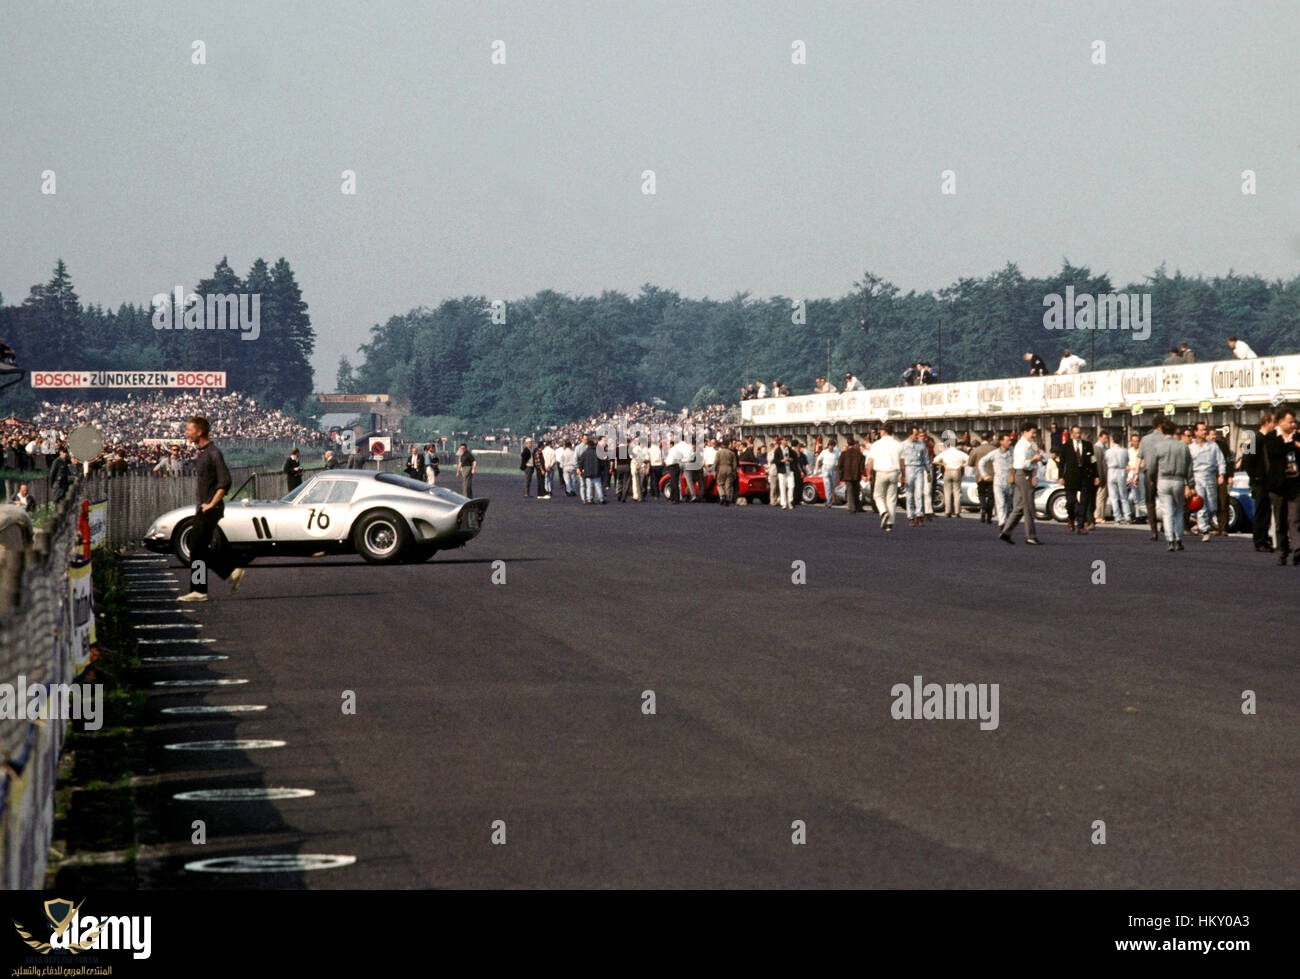 1964-manfred-ramminger-ferrari-250gto-nurburgring-1000-ks-grid-20gg-hky0a3.jpg